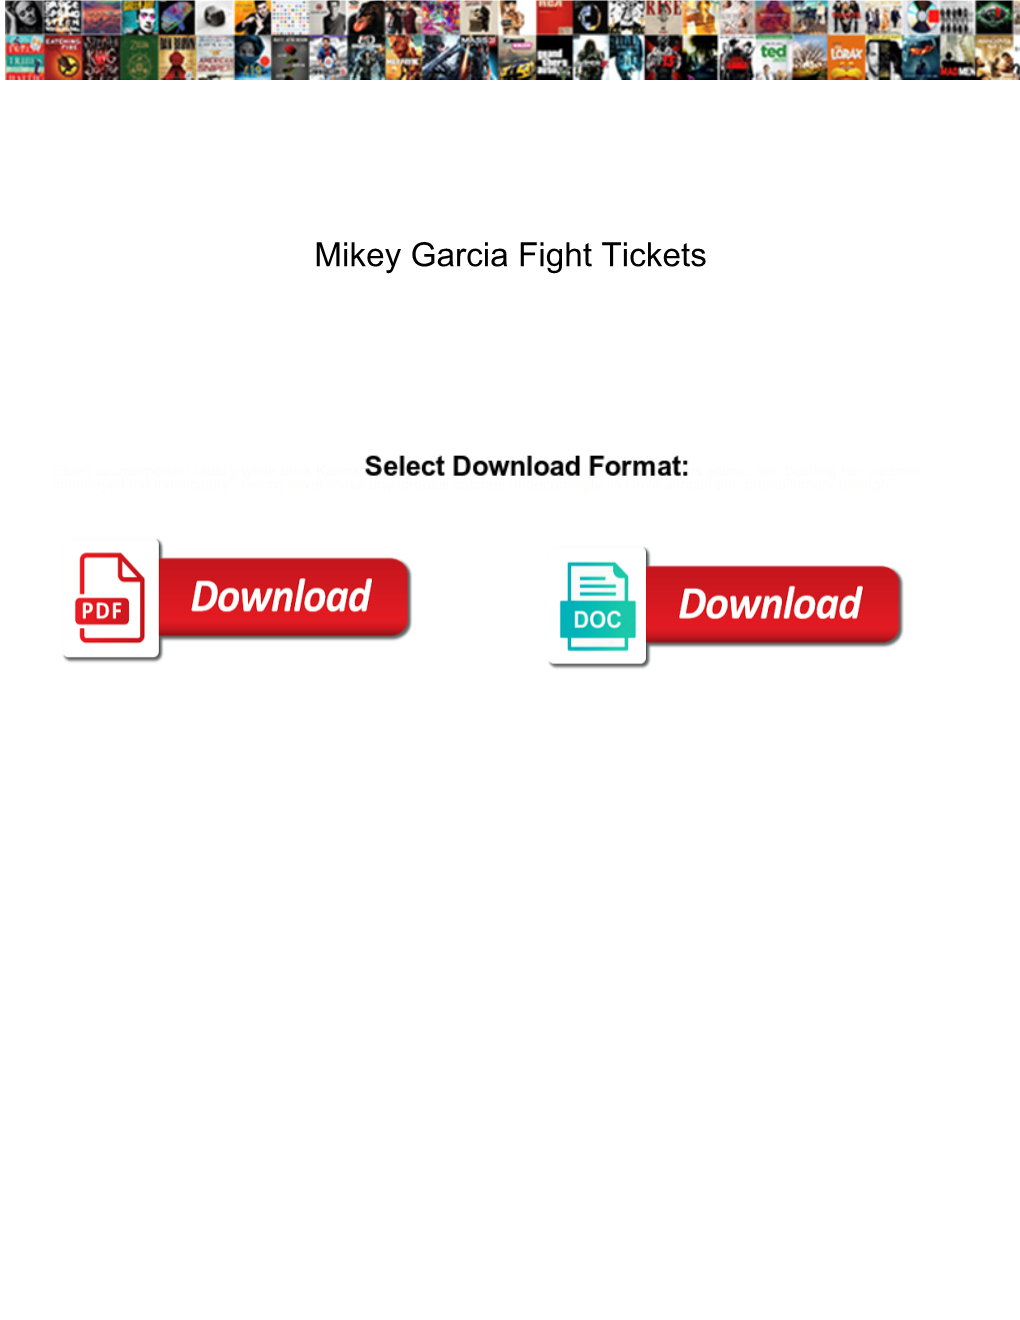 Mikey Garcia Fight Tickets